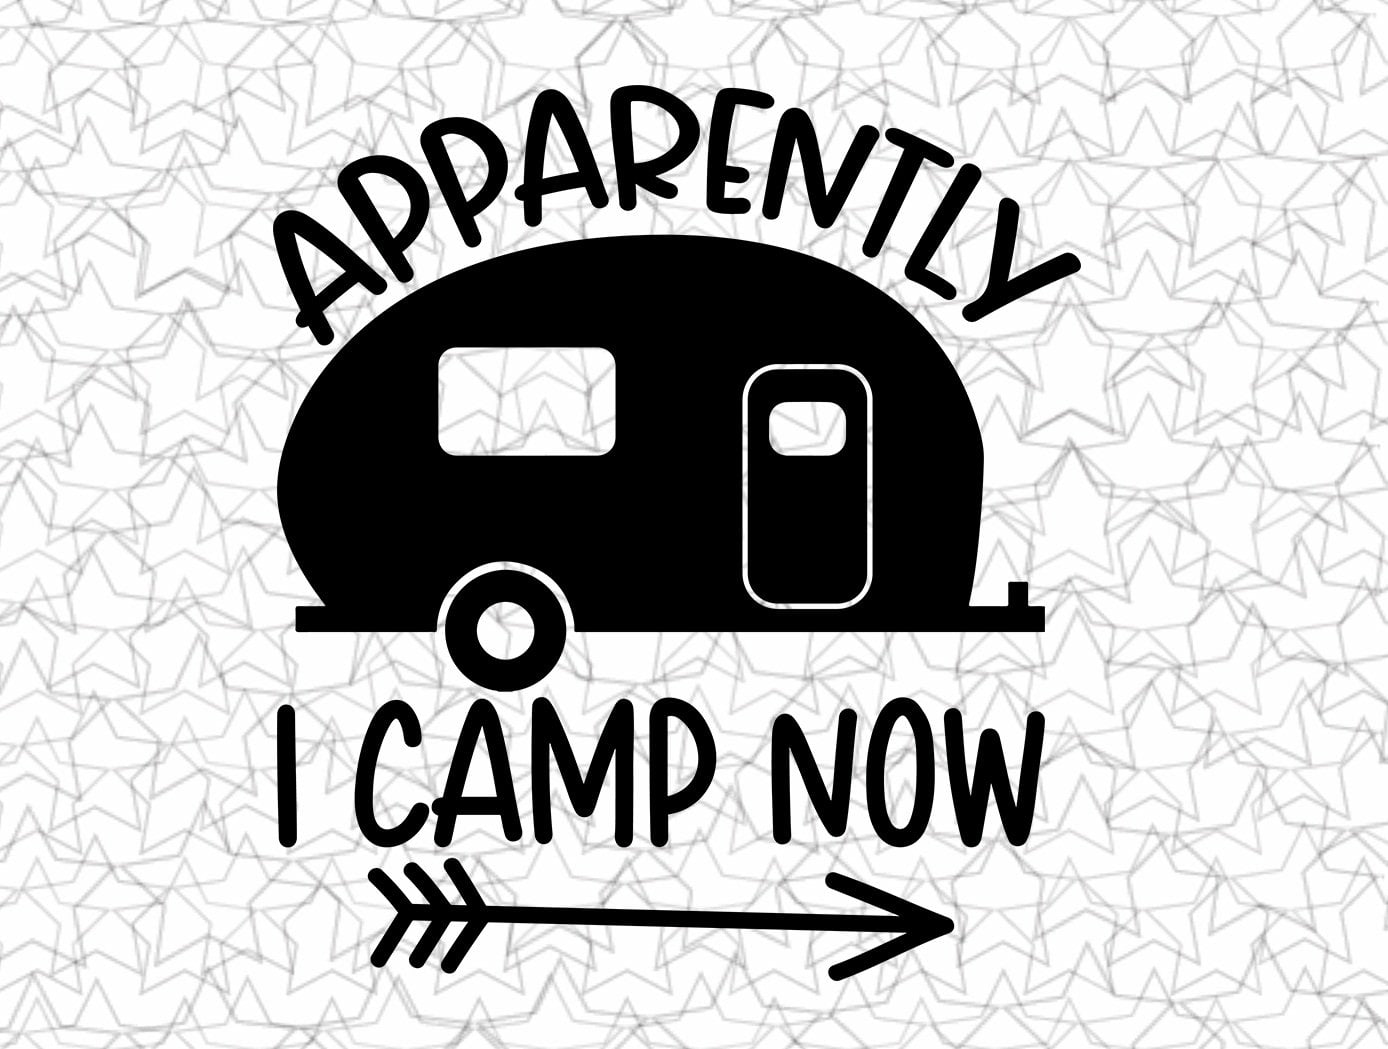 Bear Compass Decal Vinyl Sticker Tattoo Loving Camping For Camper RV Travel Trailer Truck Vehicle Car Windows Glass